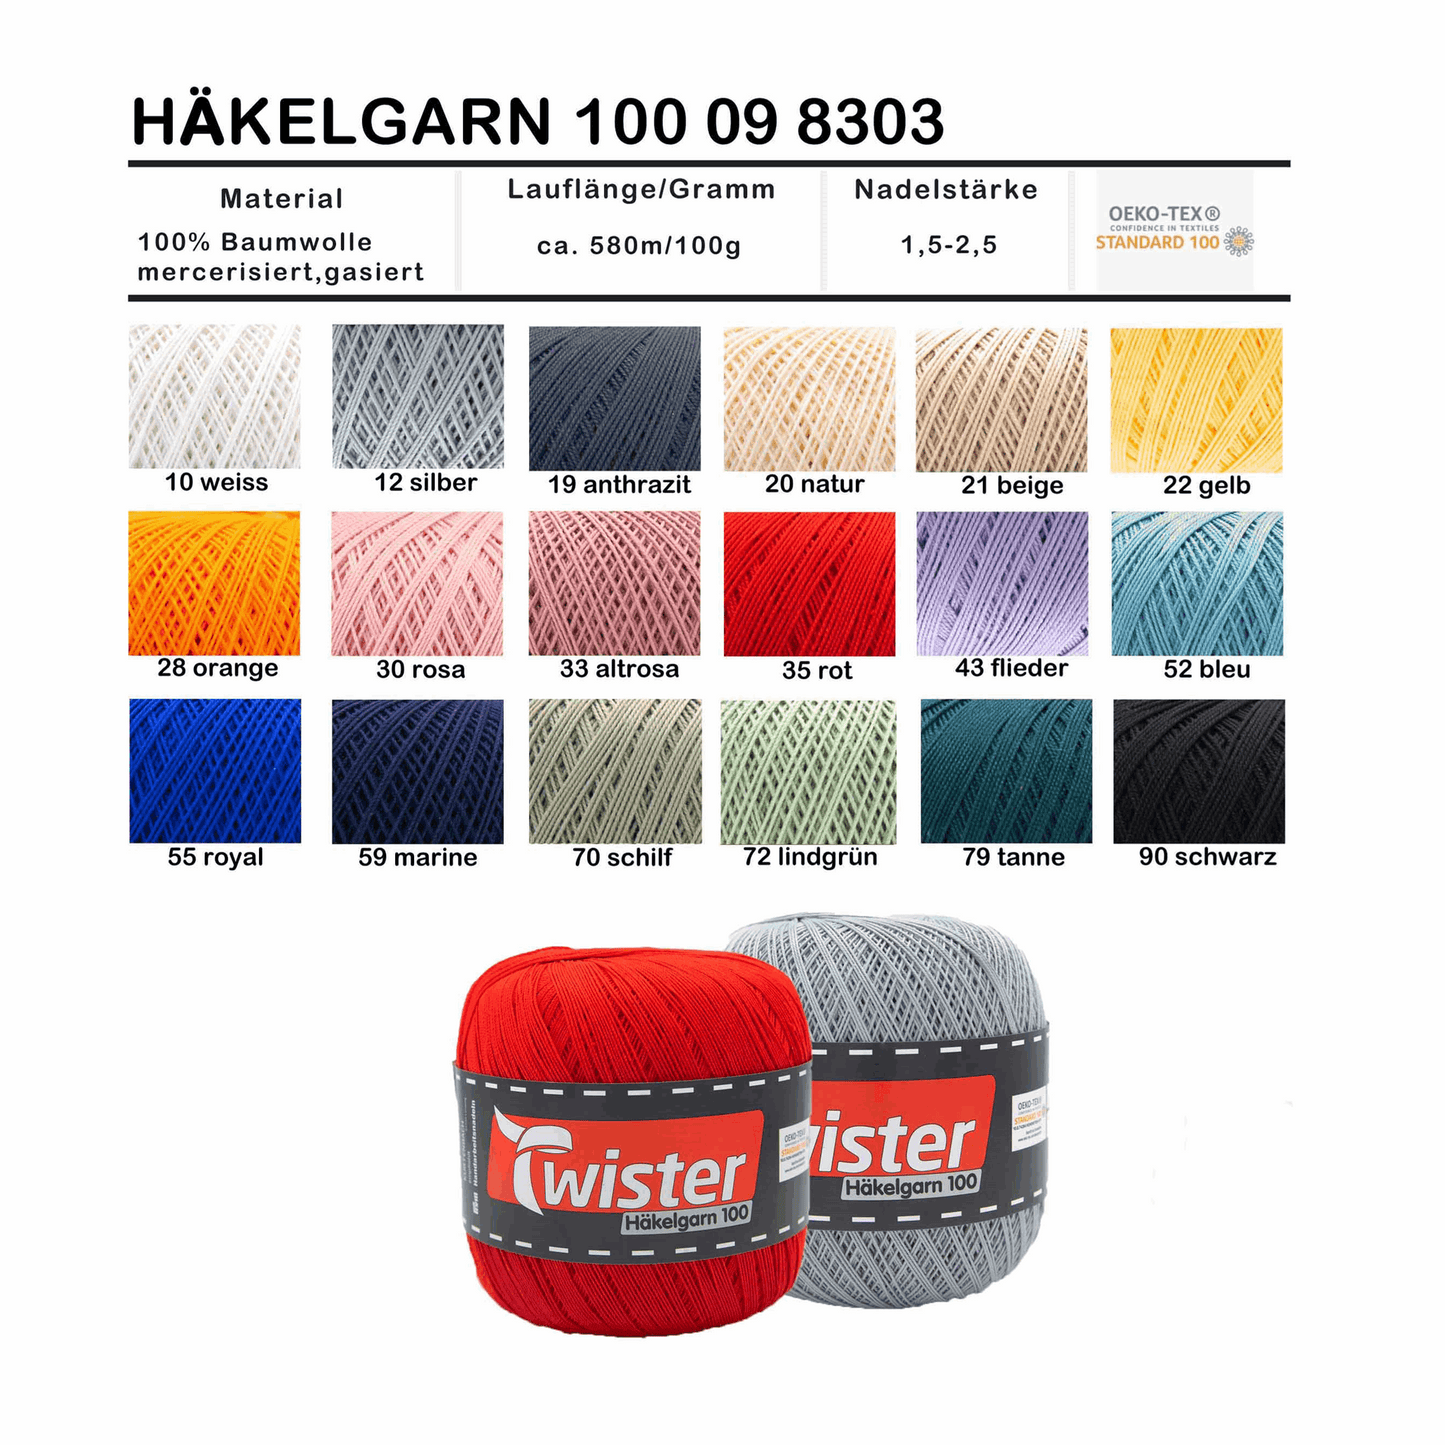 Twister Häkelgarn, 100g, 98303, Farbe lindgrün 72